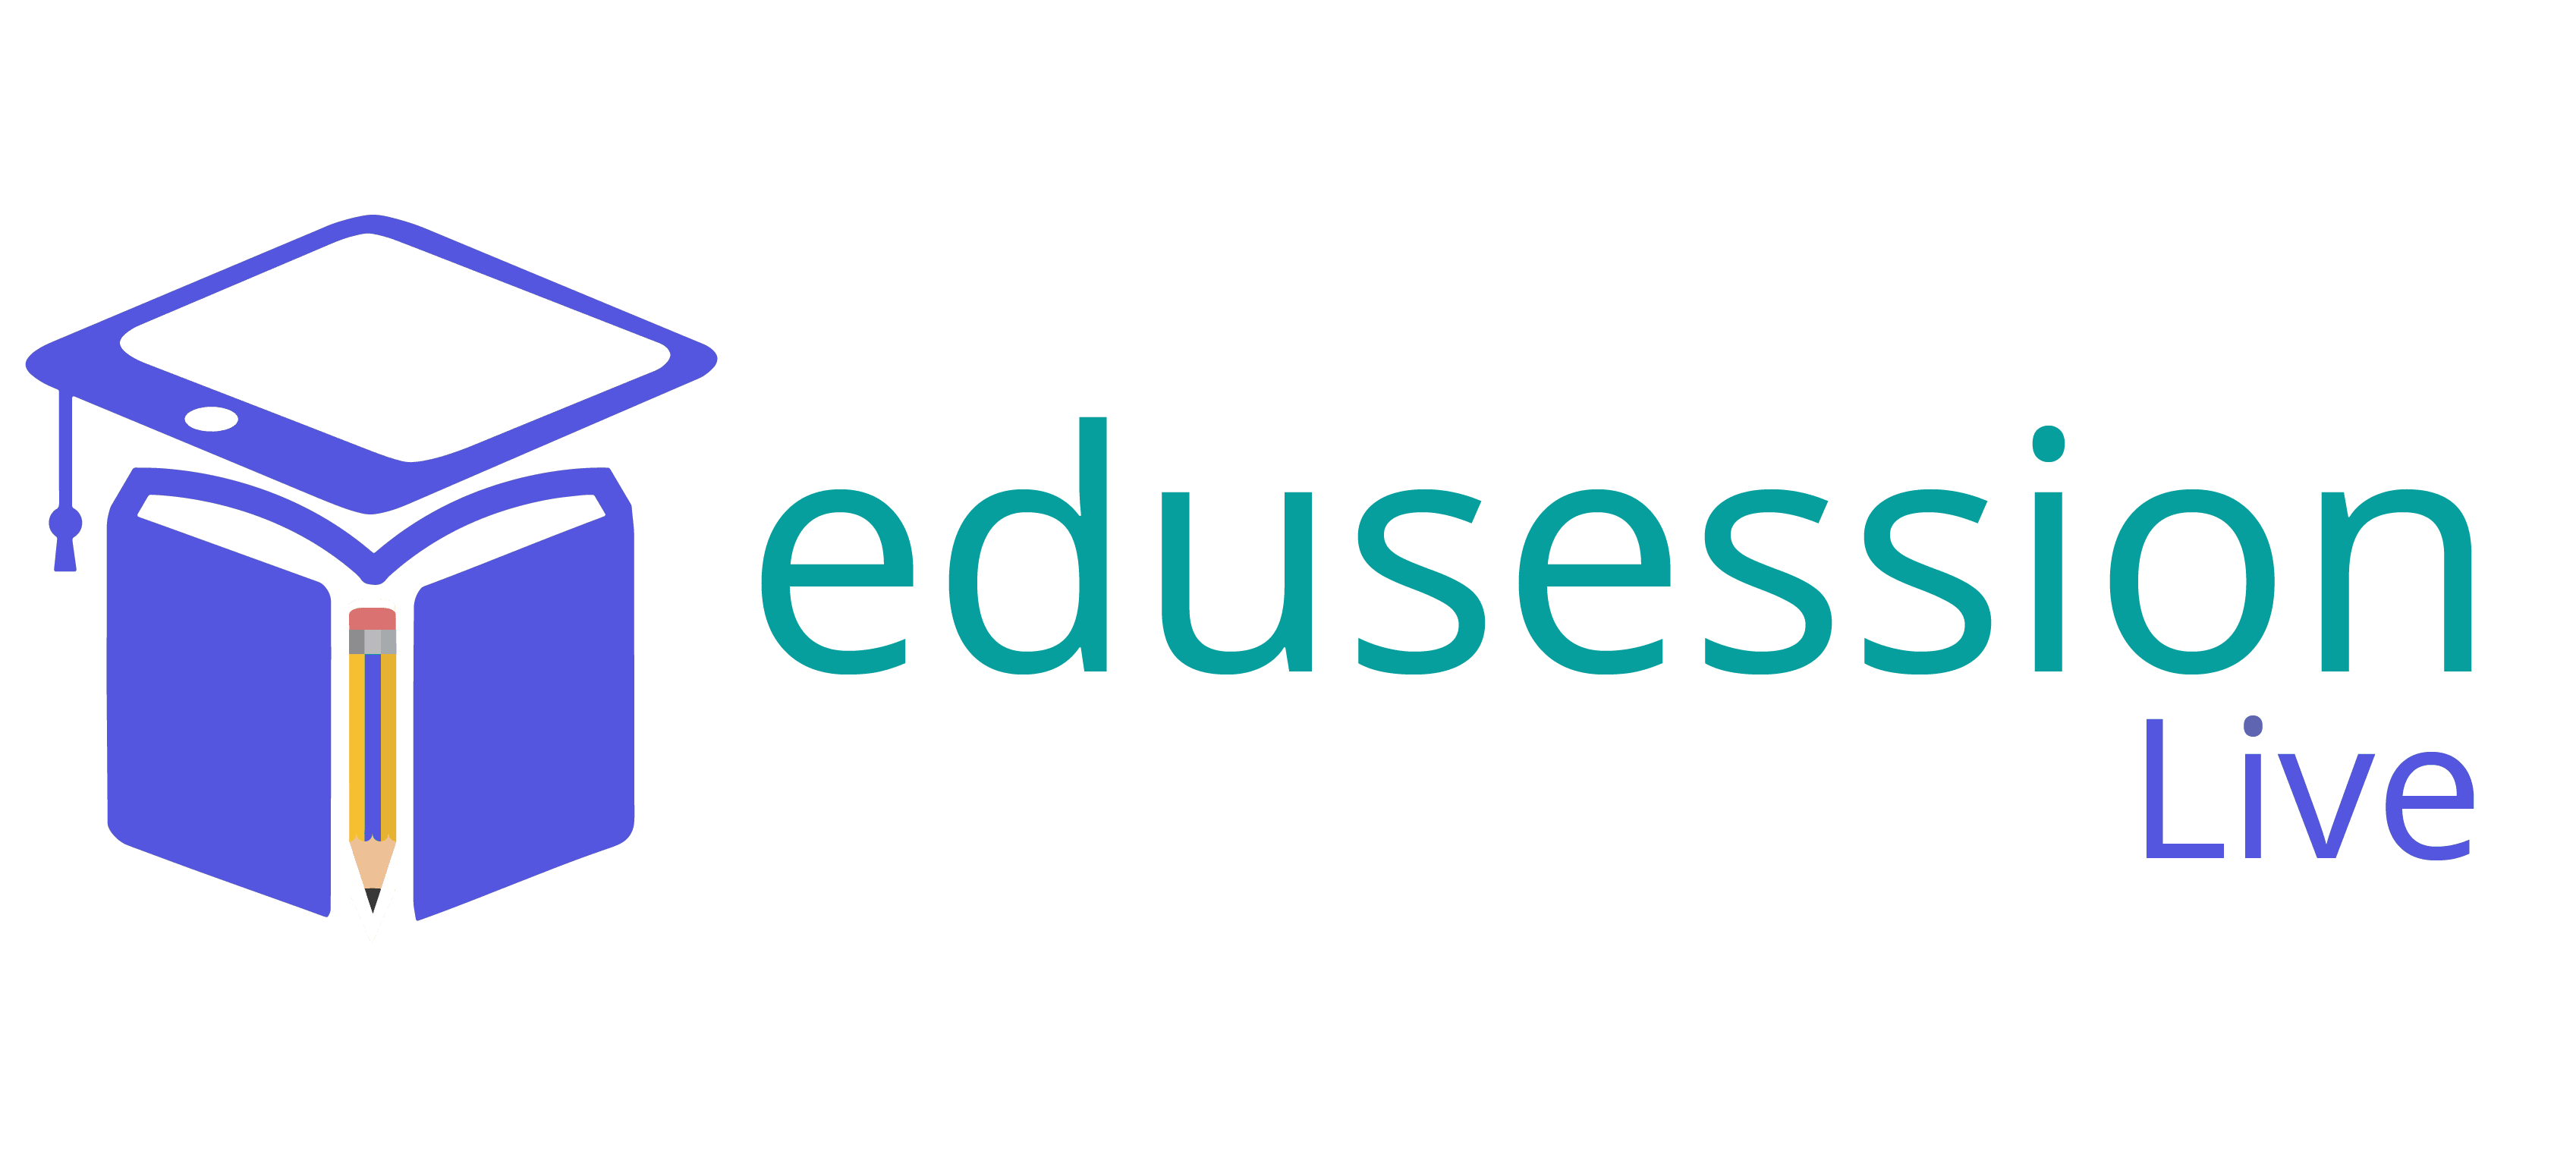 Edusession Logo